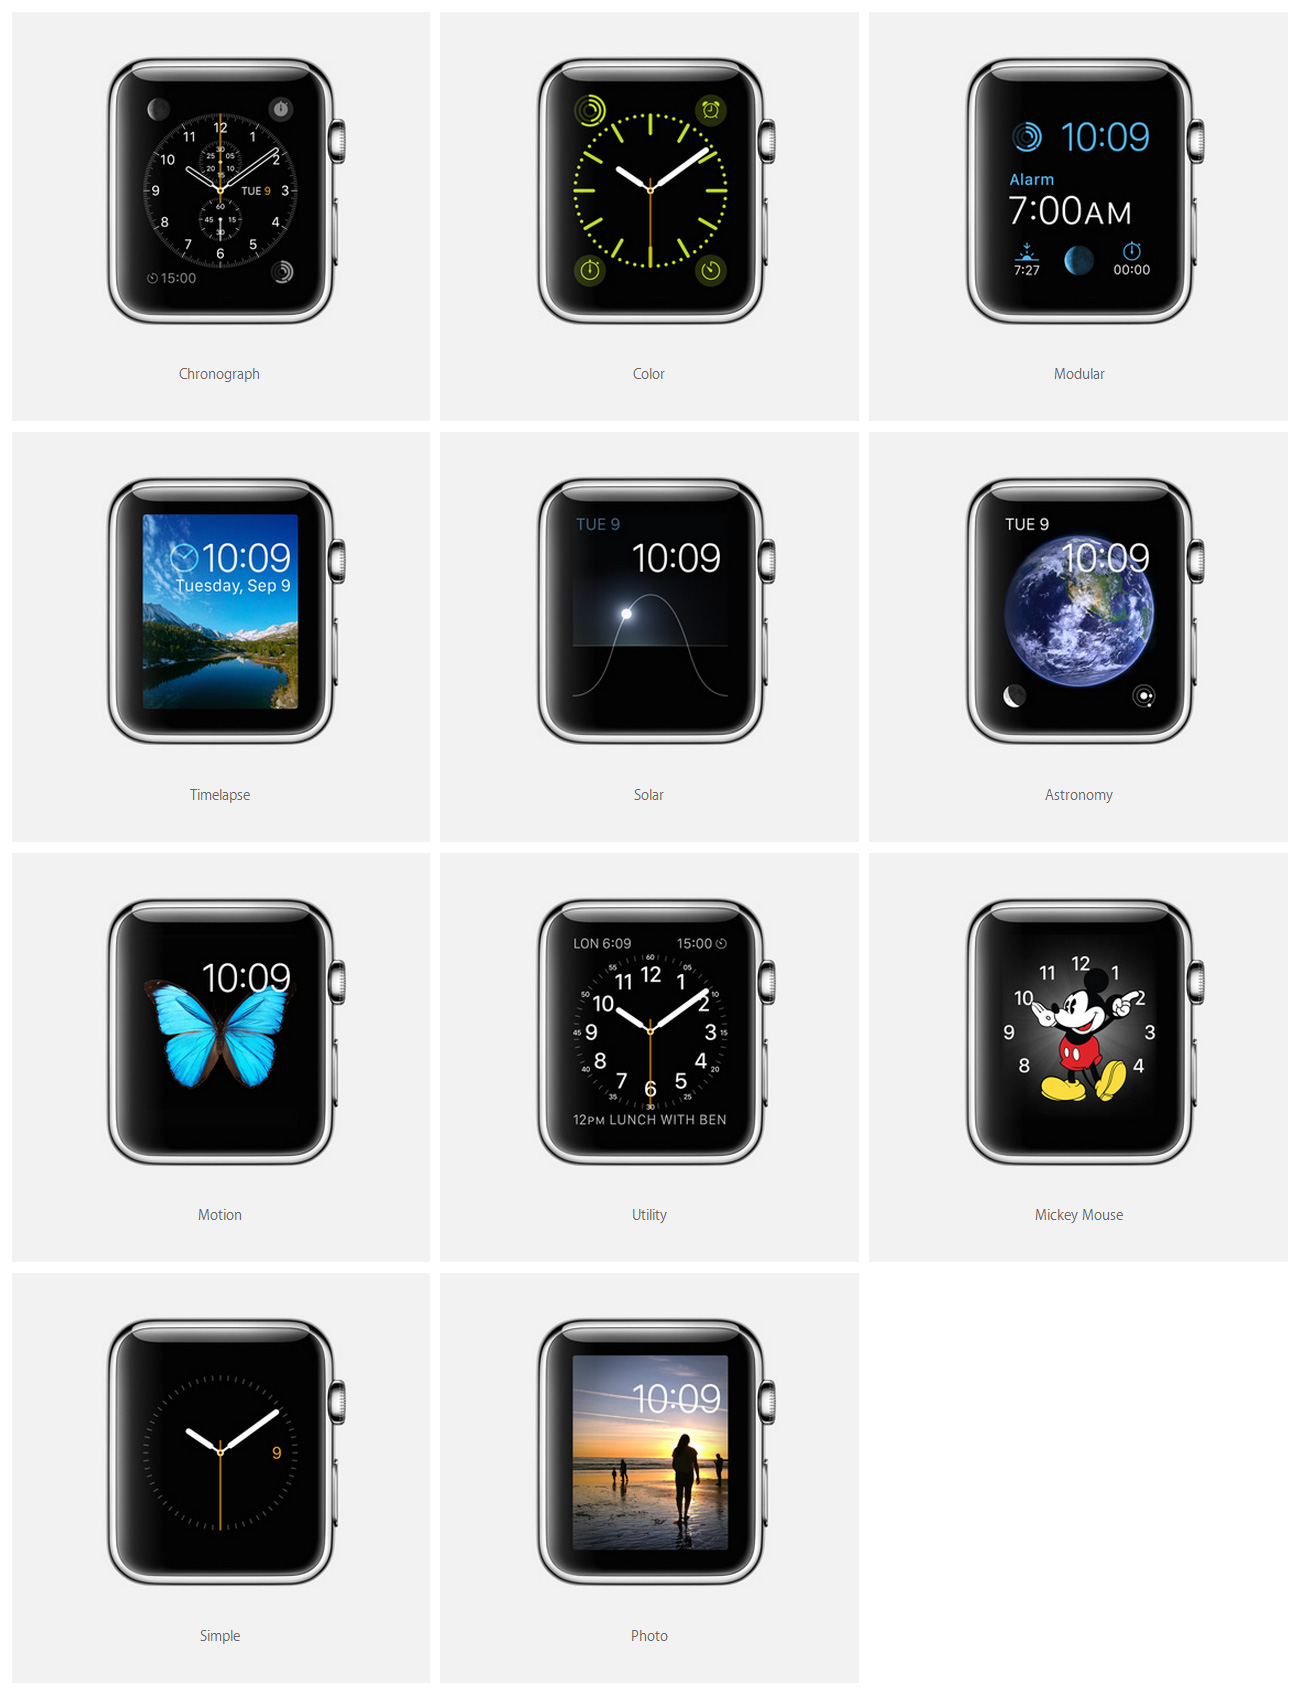 Циферблат часов на айфоне. Часы от Эппл вотч. Apple IWATCH 10. Последняя версия смарт часов айфон. Модели часов Apple IWATCH по порядку.